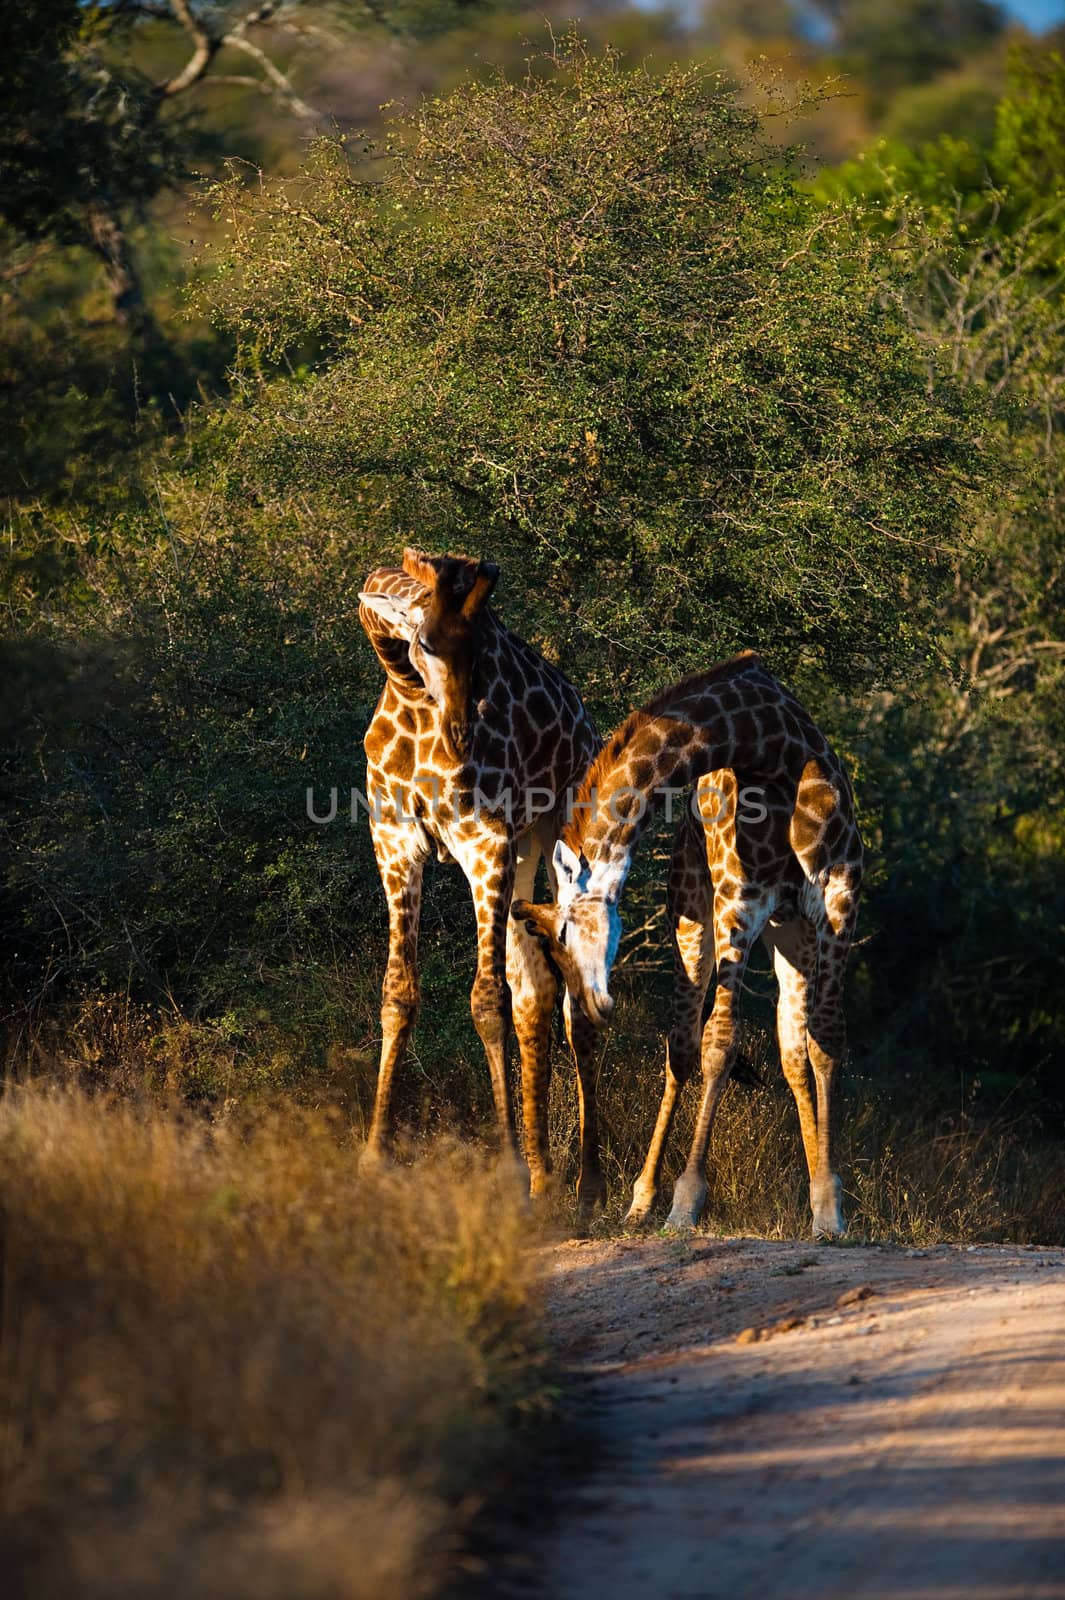 Two giraffes (Giraffa camelopardalis) walking, South Africa